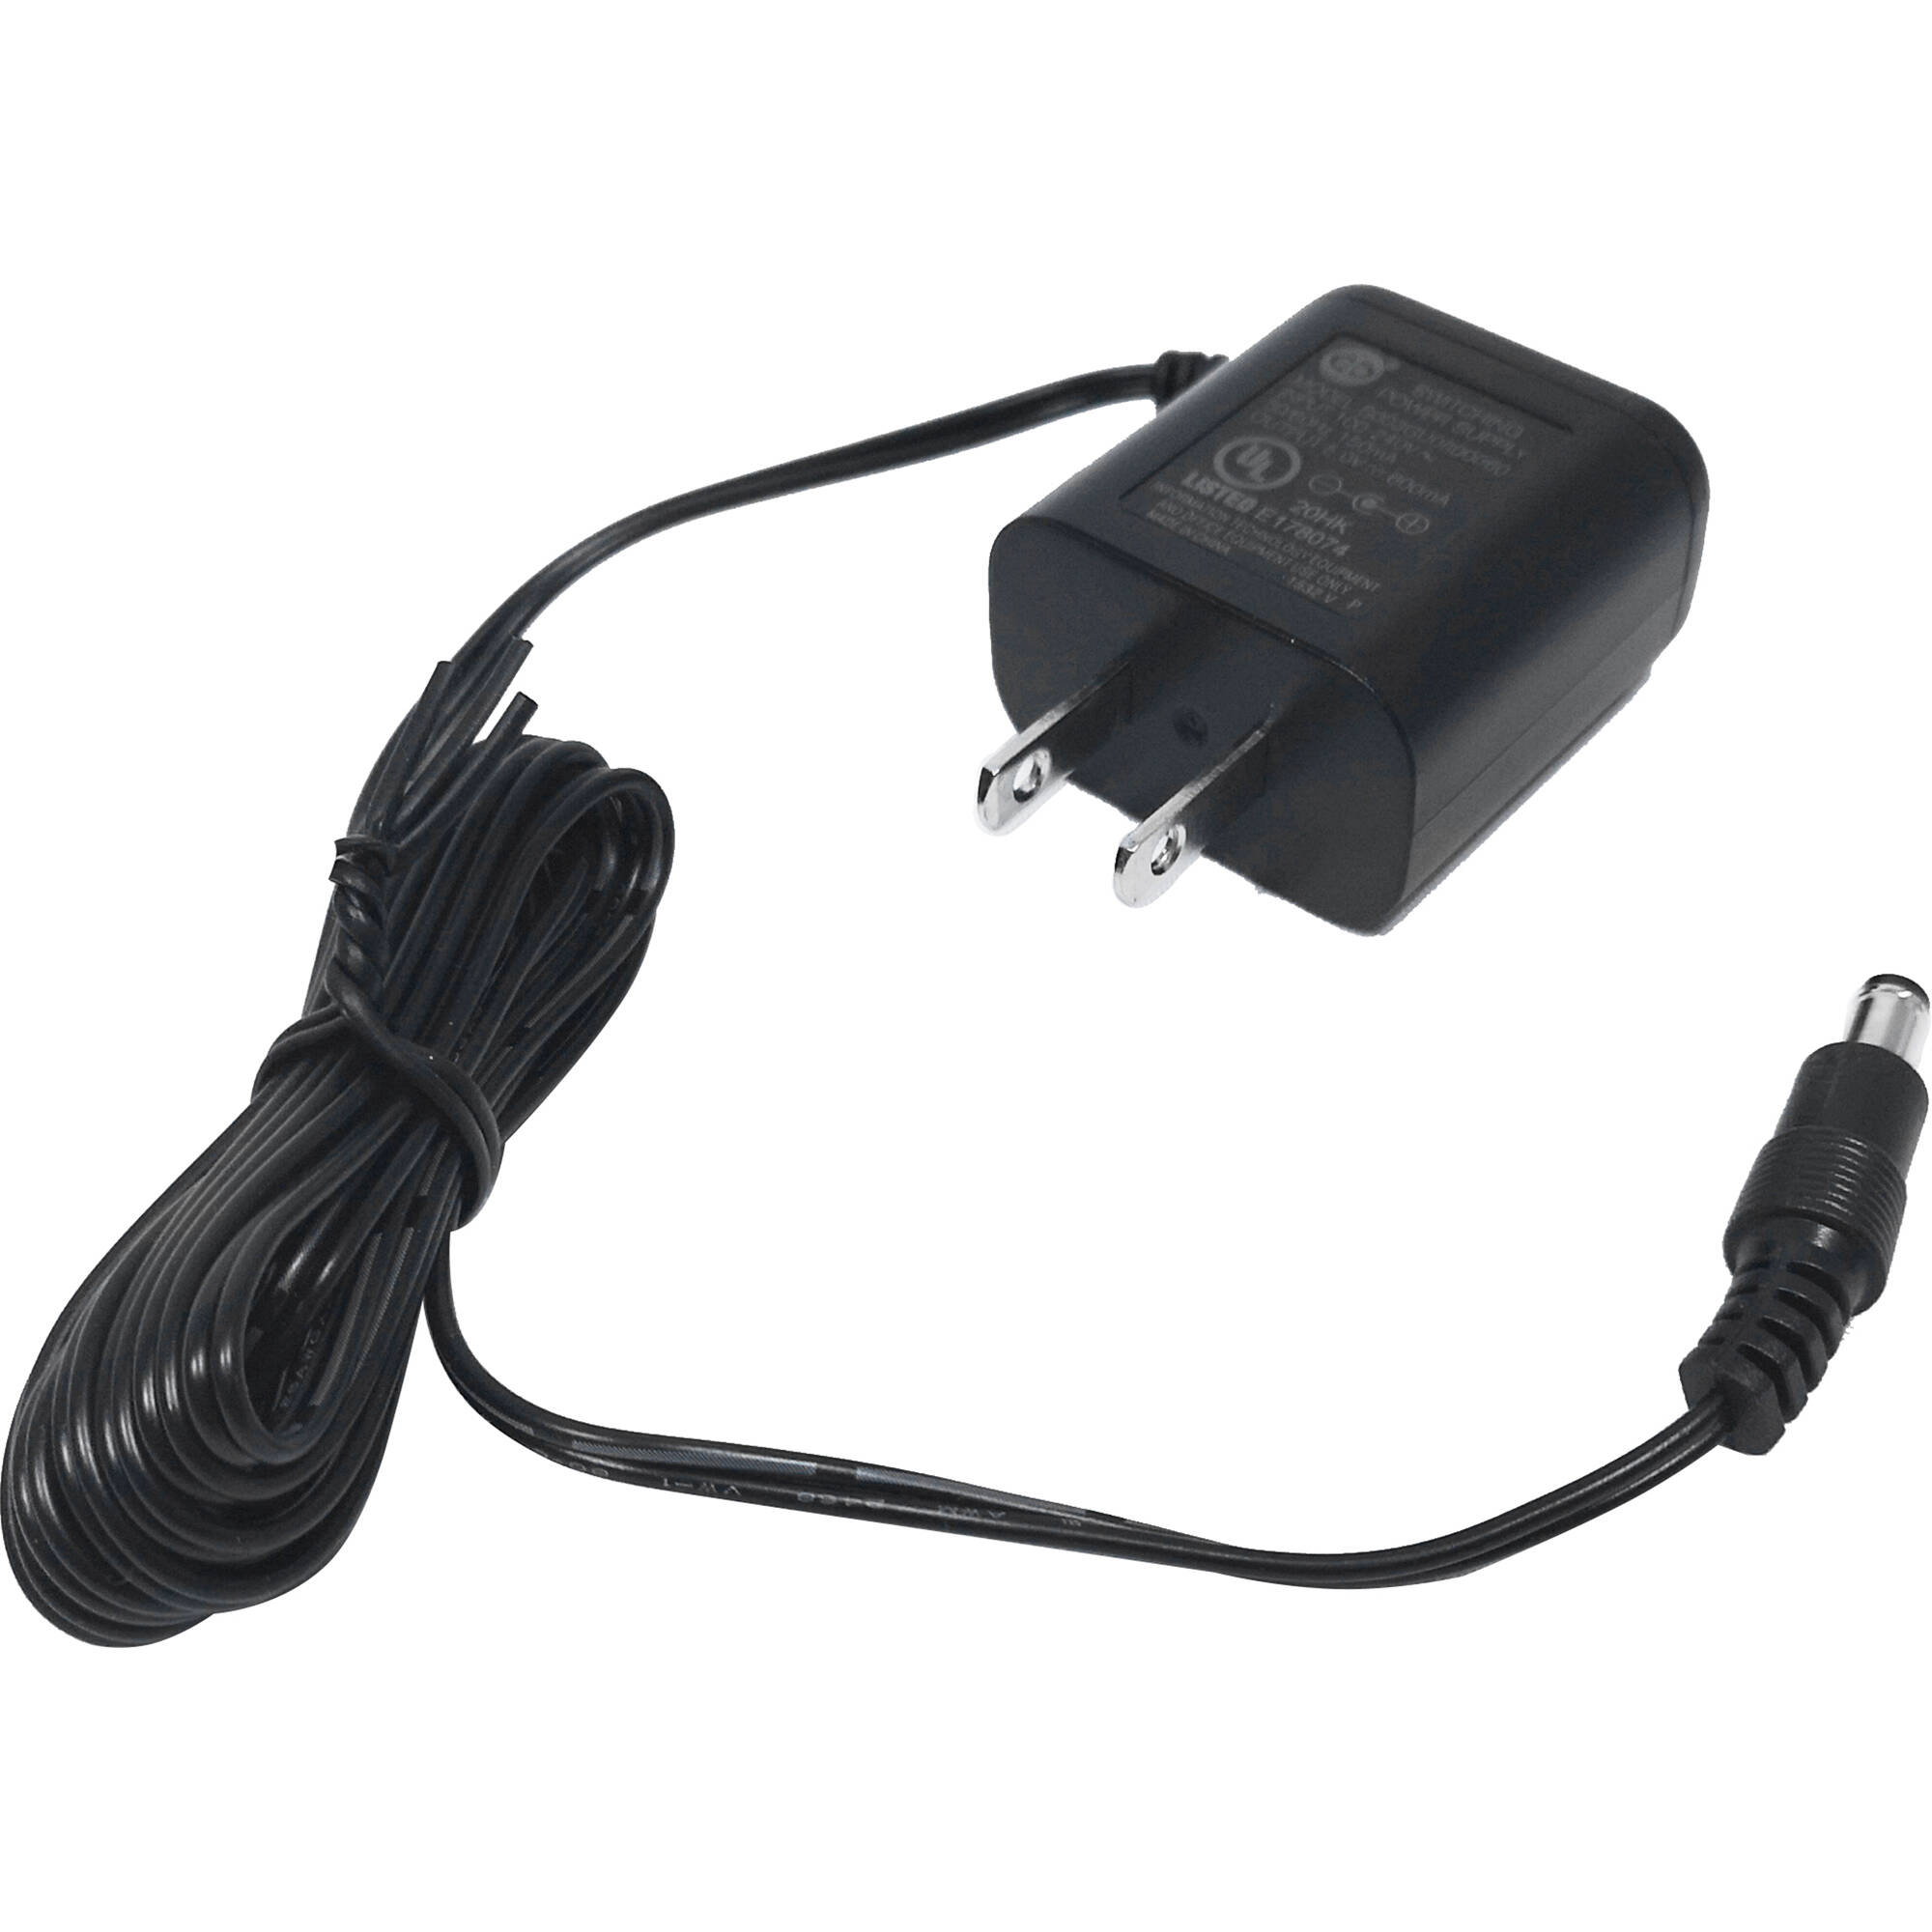 Konftel IP DECT 10 Power Adapter - 840102133 - Headset Advisor